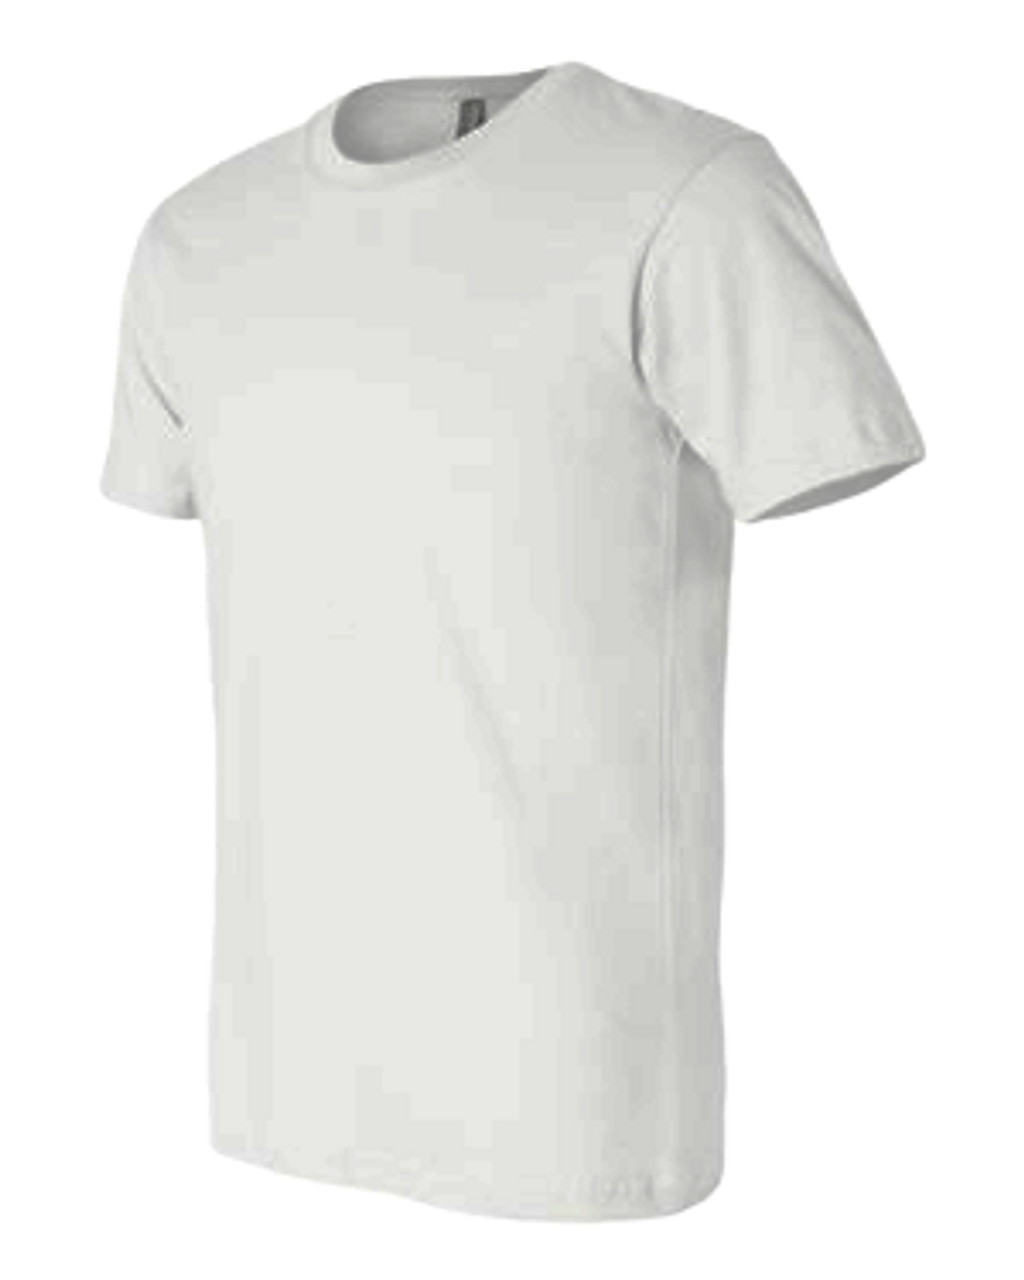 Bella Canvas 3001cvc Solid White Blend Unisex Heather Cvc T Shirt